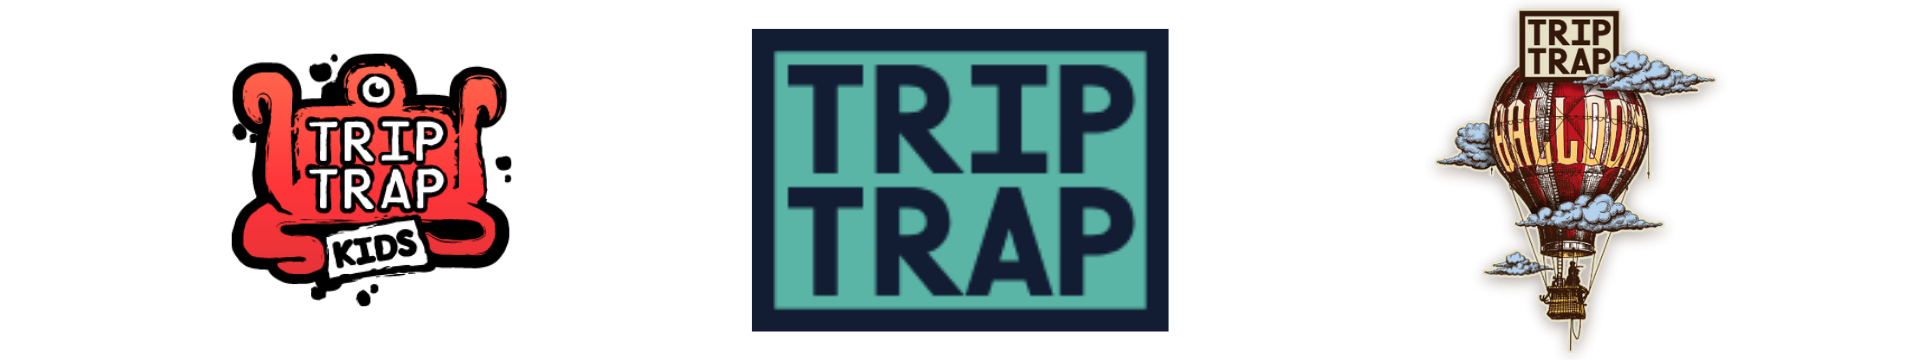 Tripp Trapp